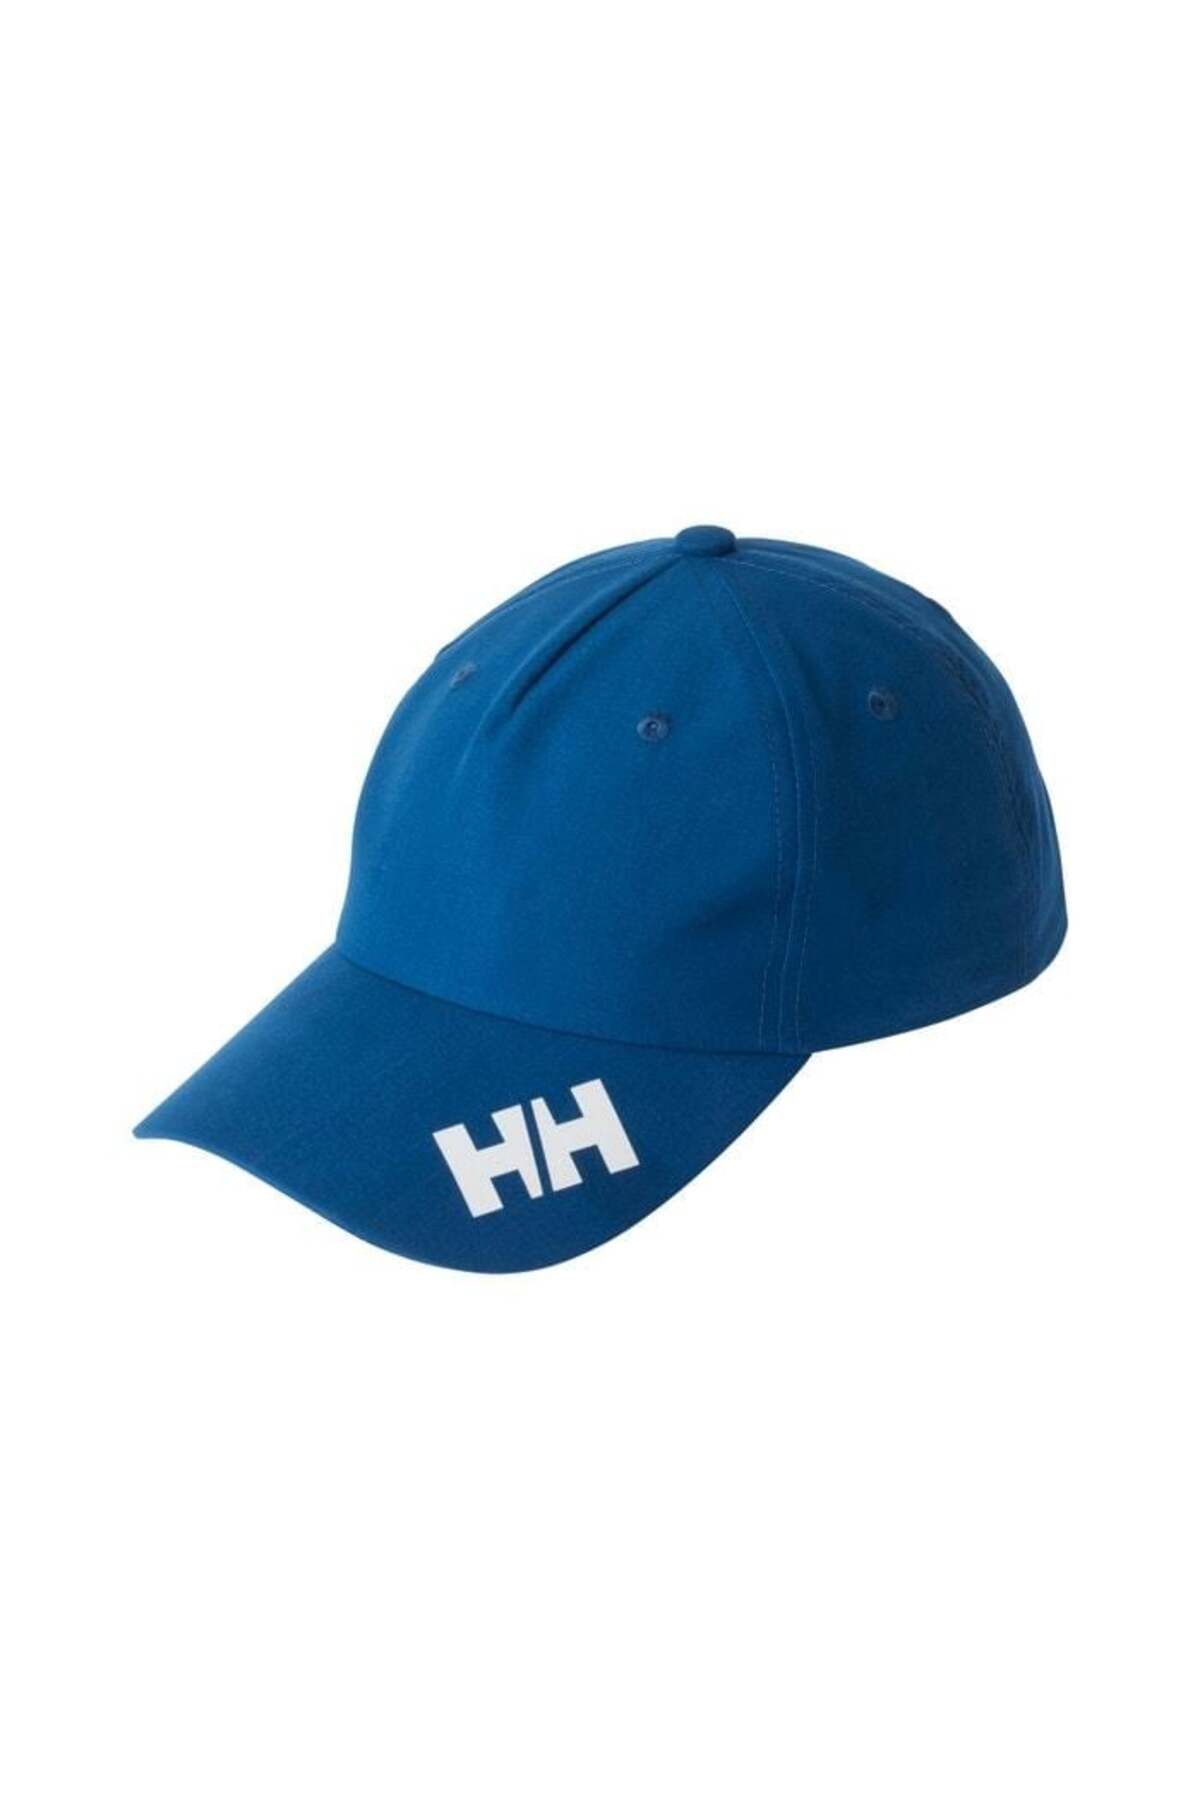 Helly Hansen Hh Crew Cap